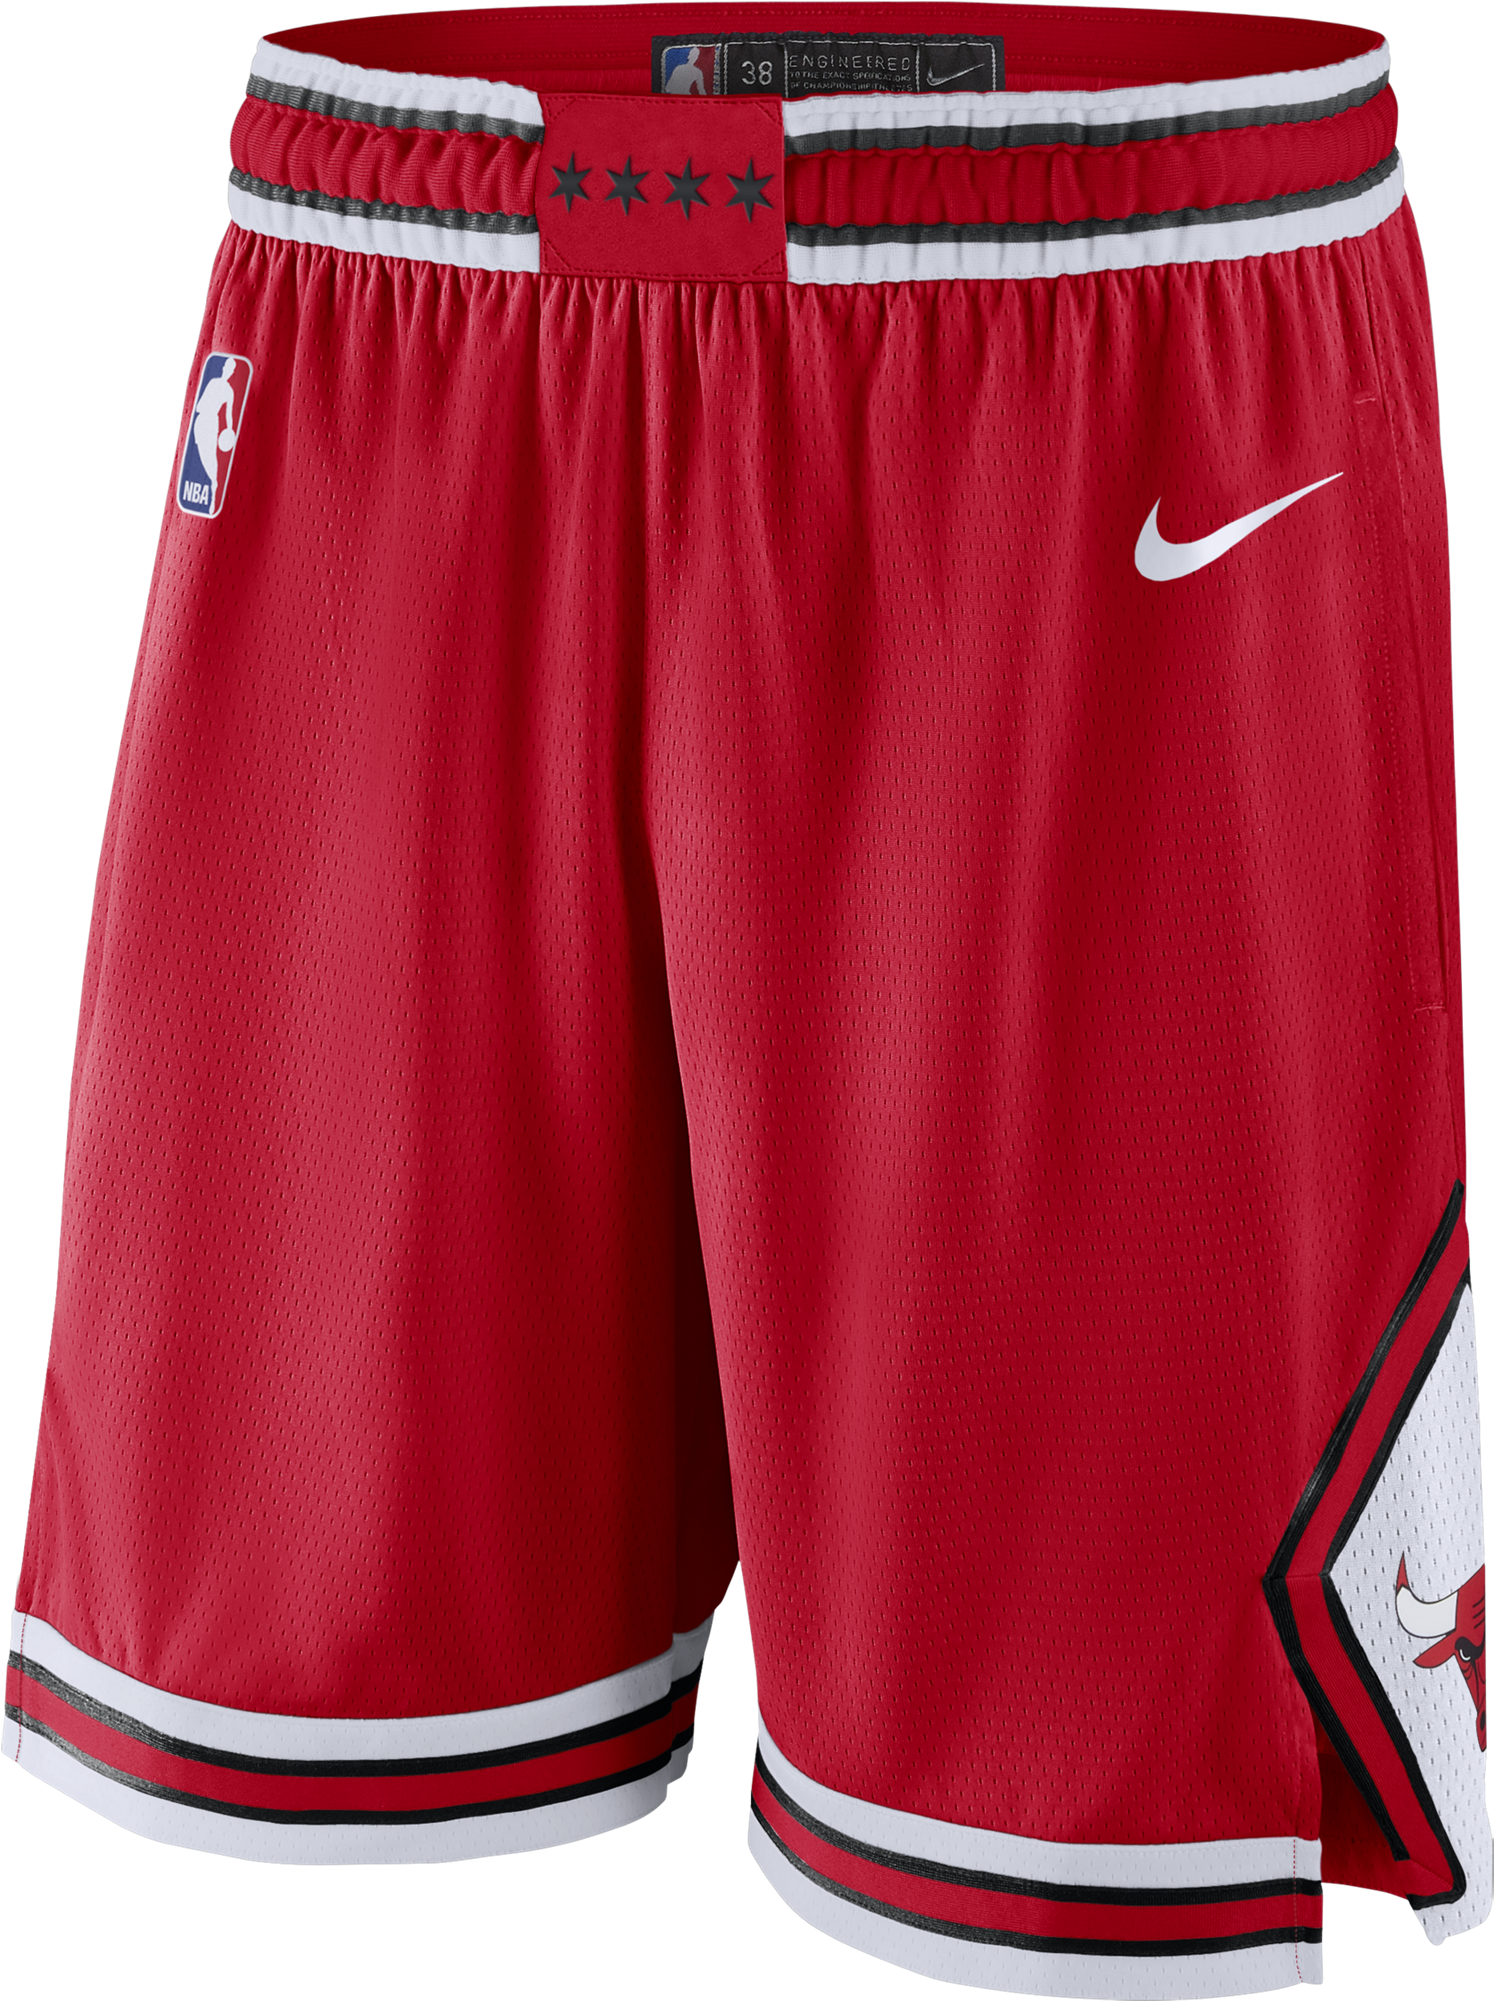 Nike Nba Chicago Bulls Swingman Road Shorts - Nike Bulls Shorts, Hd Png Download